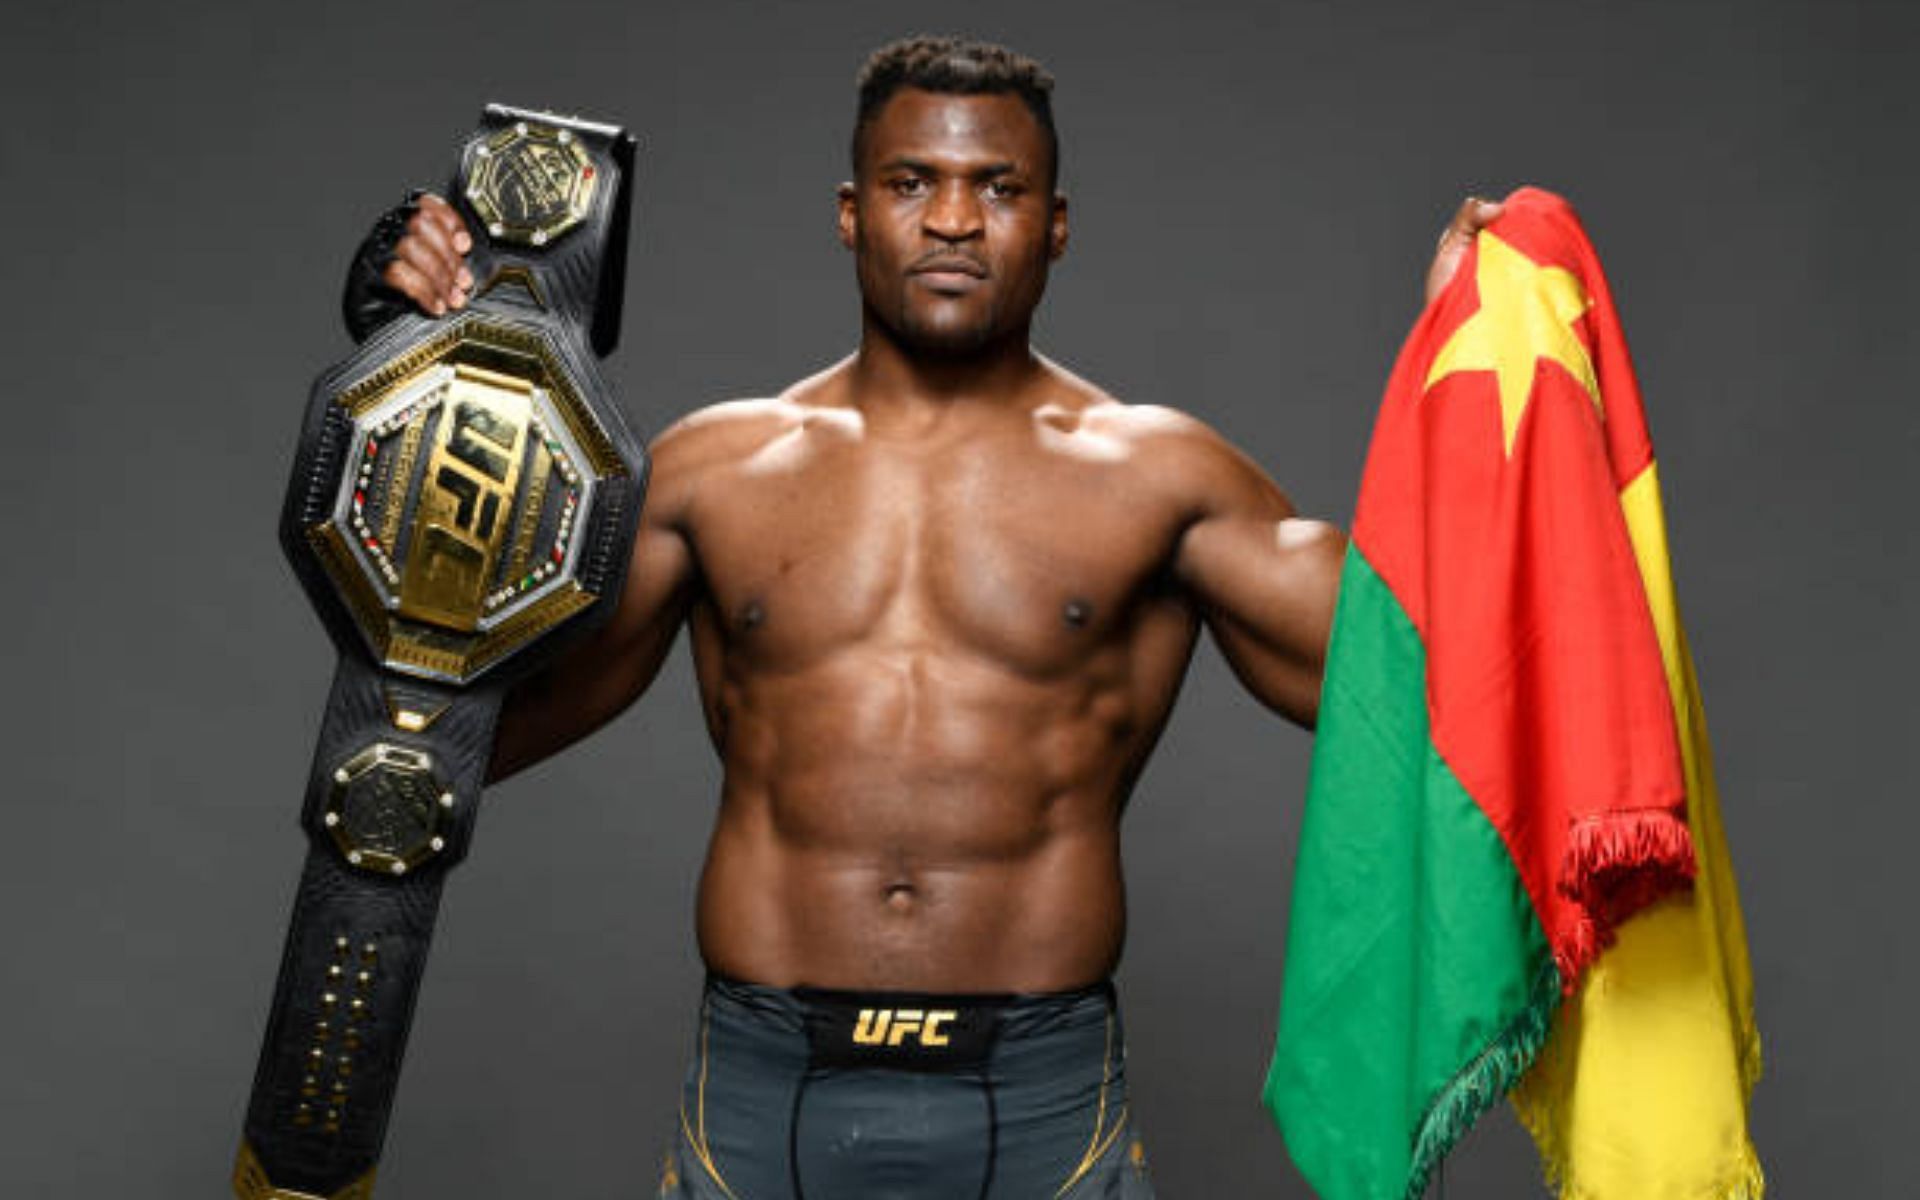 UFC heavyweight champion Francis Ngannou